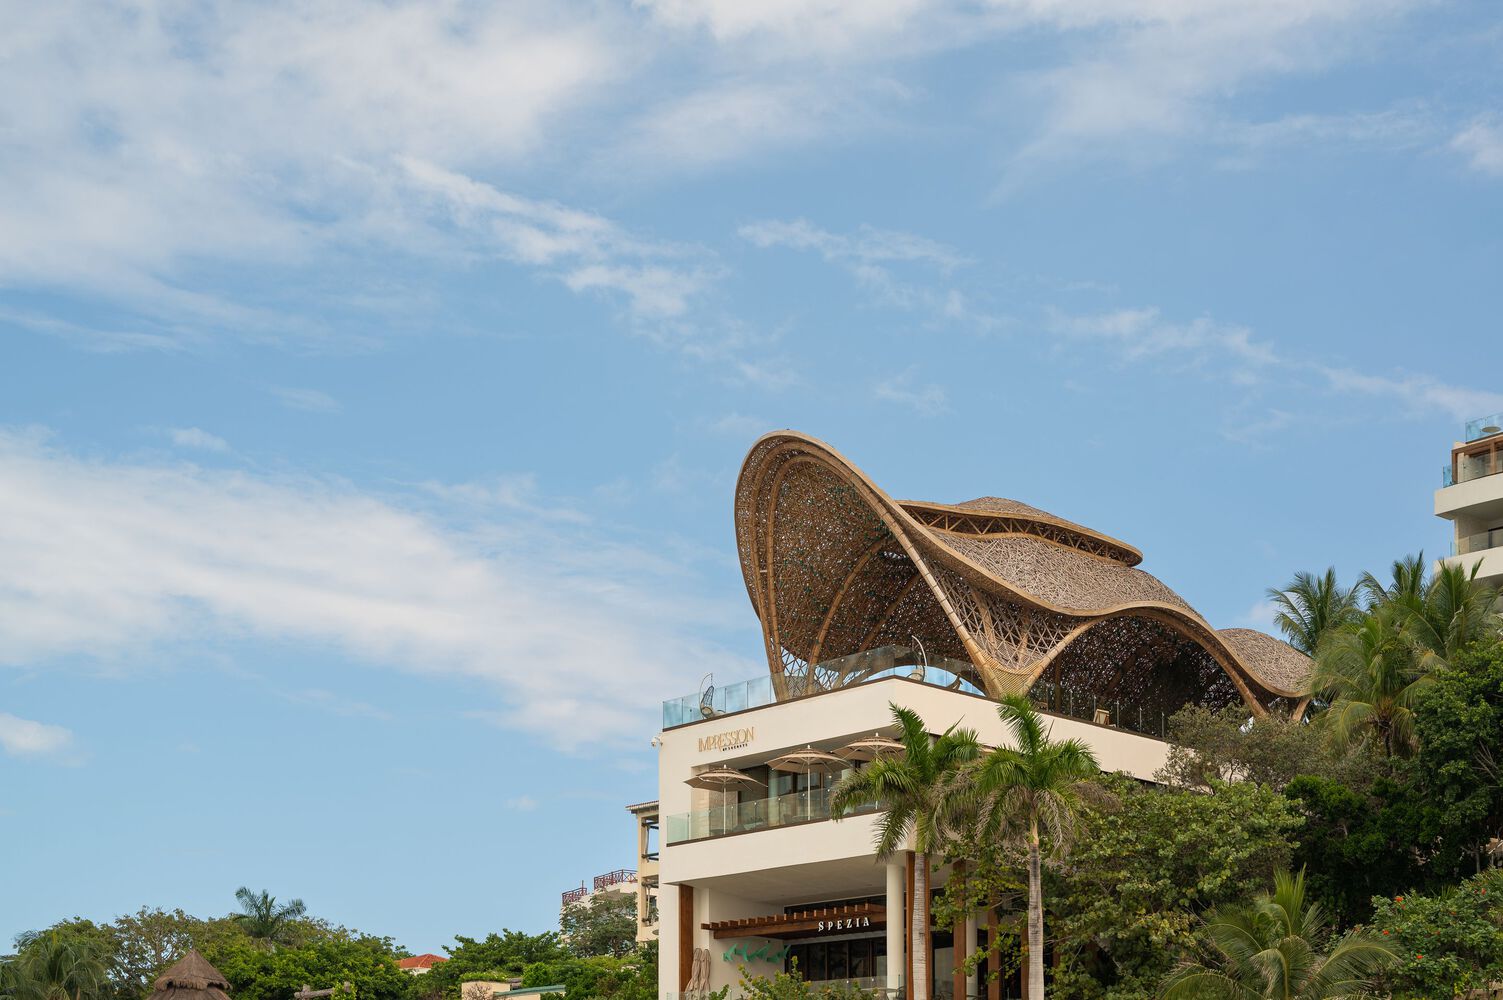 Bamboo Temple Hotel / Arquitectura Mixta